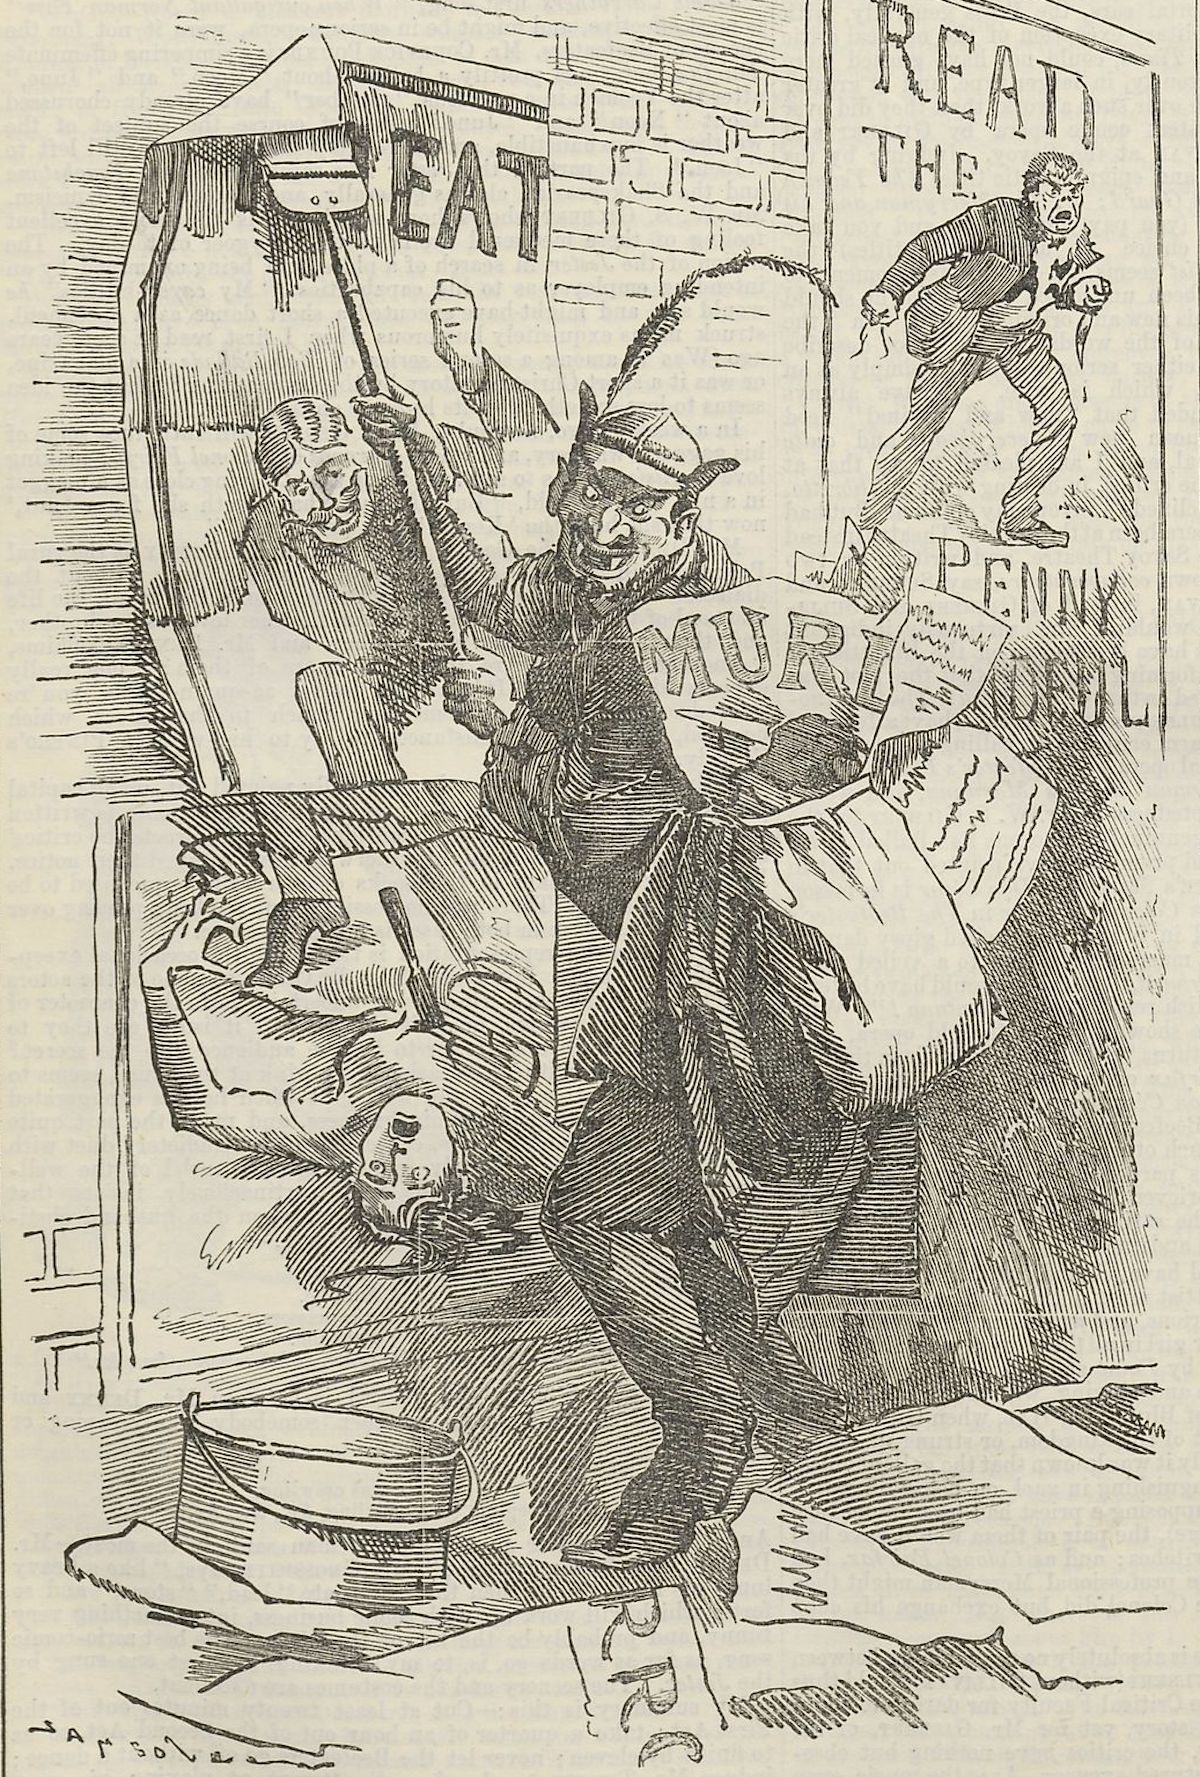 ’Horrible London: or, the pandemonium of posters‘ from Punch, 1888. Universitätsbibliothek Heidelberg. Public Domain.